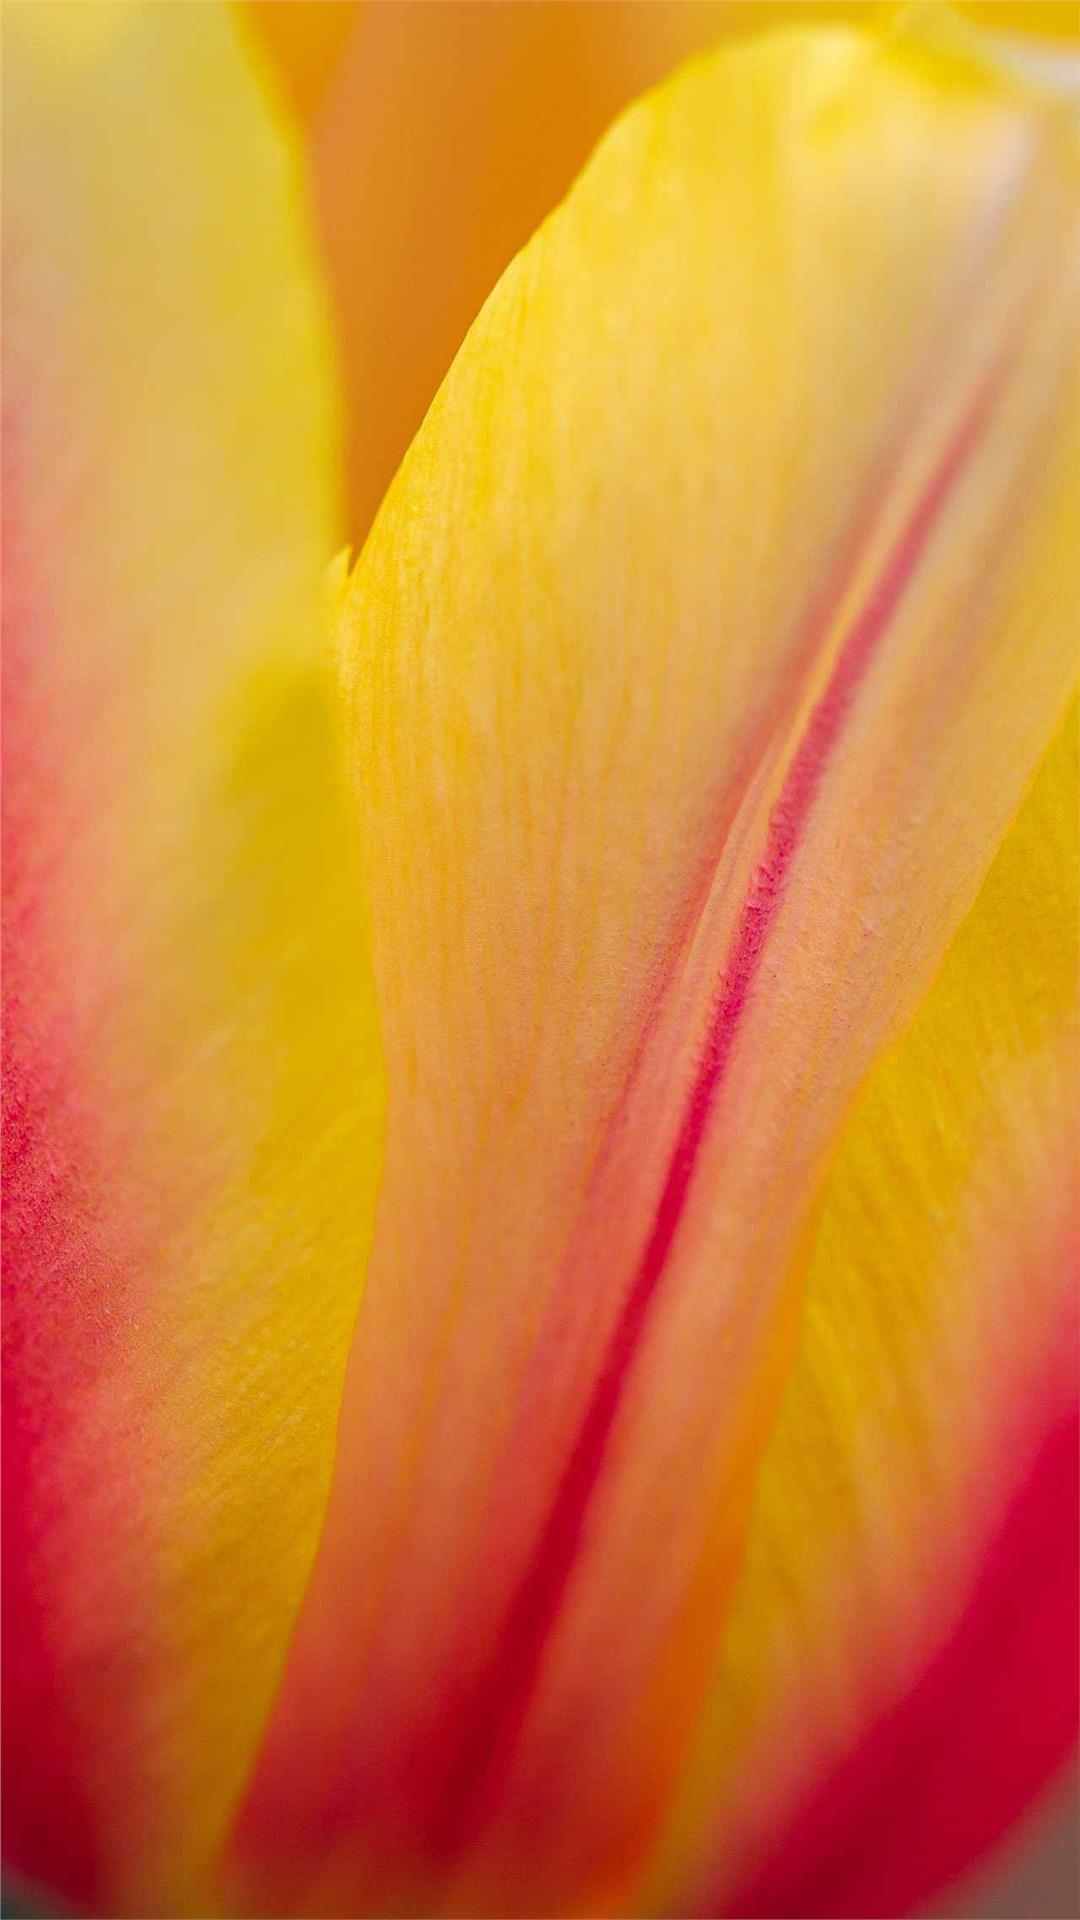 Tulip Flower iPhone Wallpaper